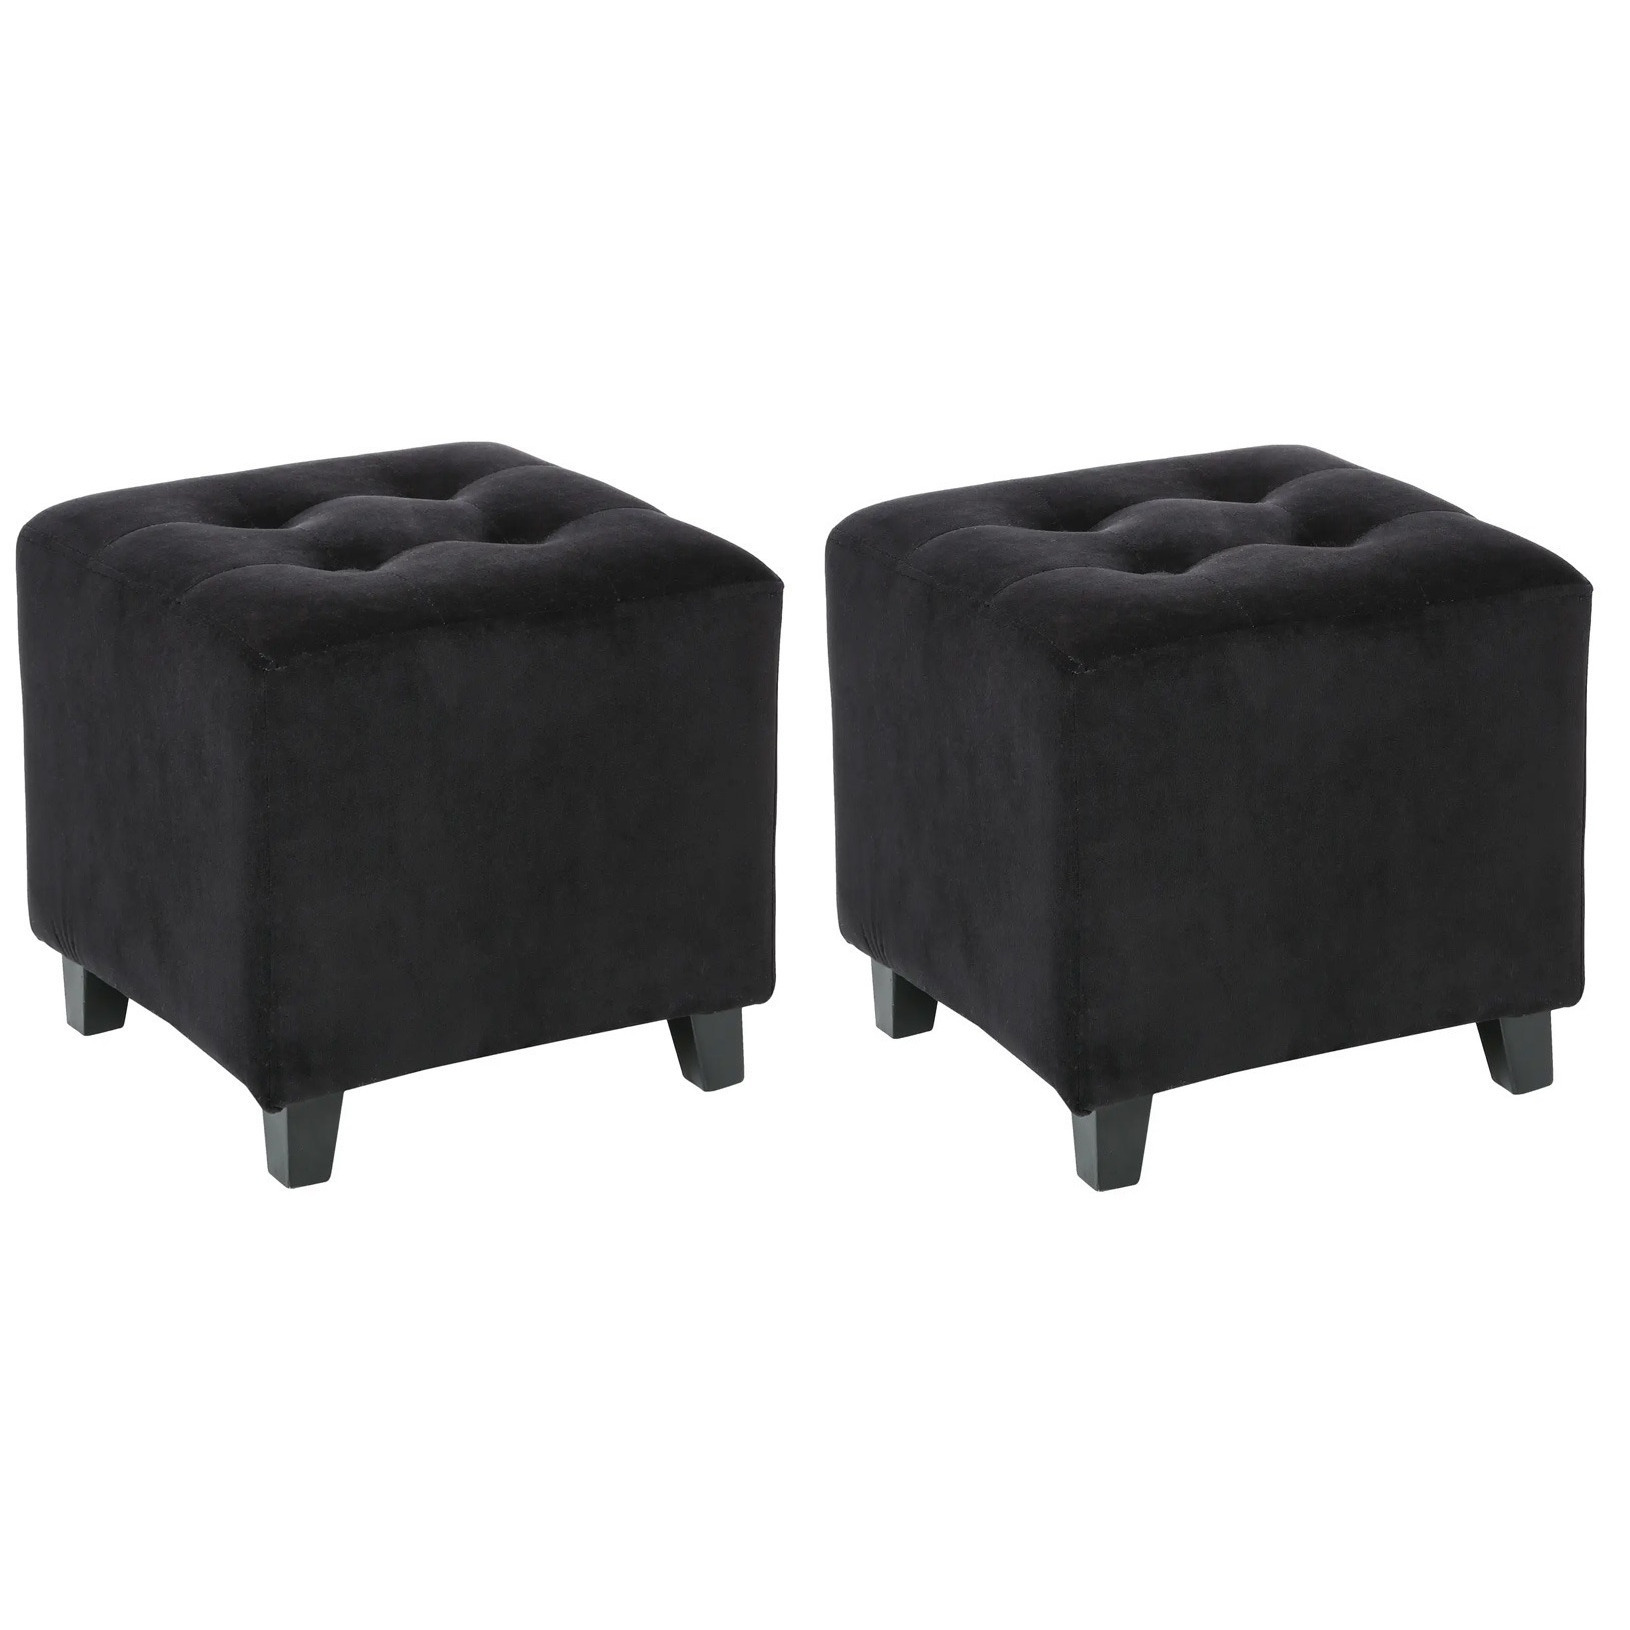 Zit krukje-bijzet stoel-poef 2x hout-stof zwart fluweel D35 x H40 cm